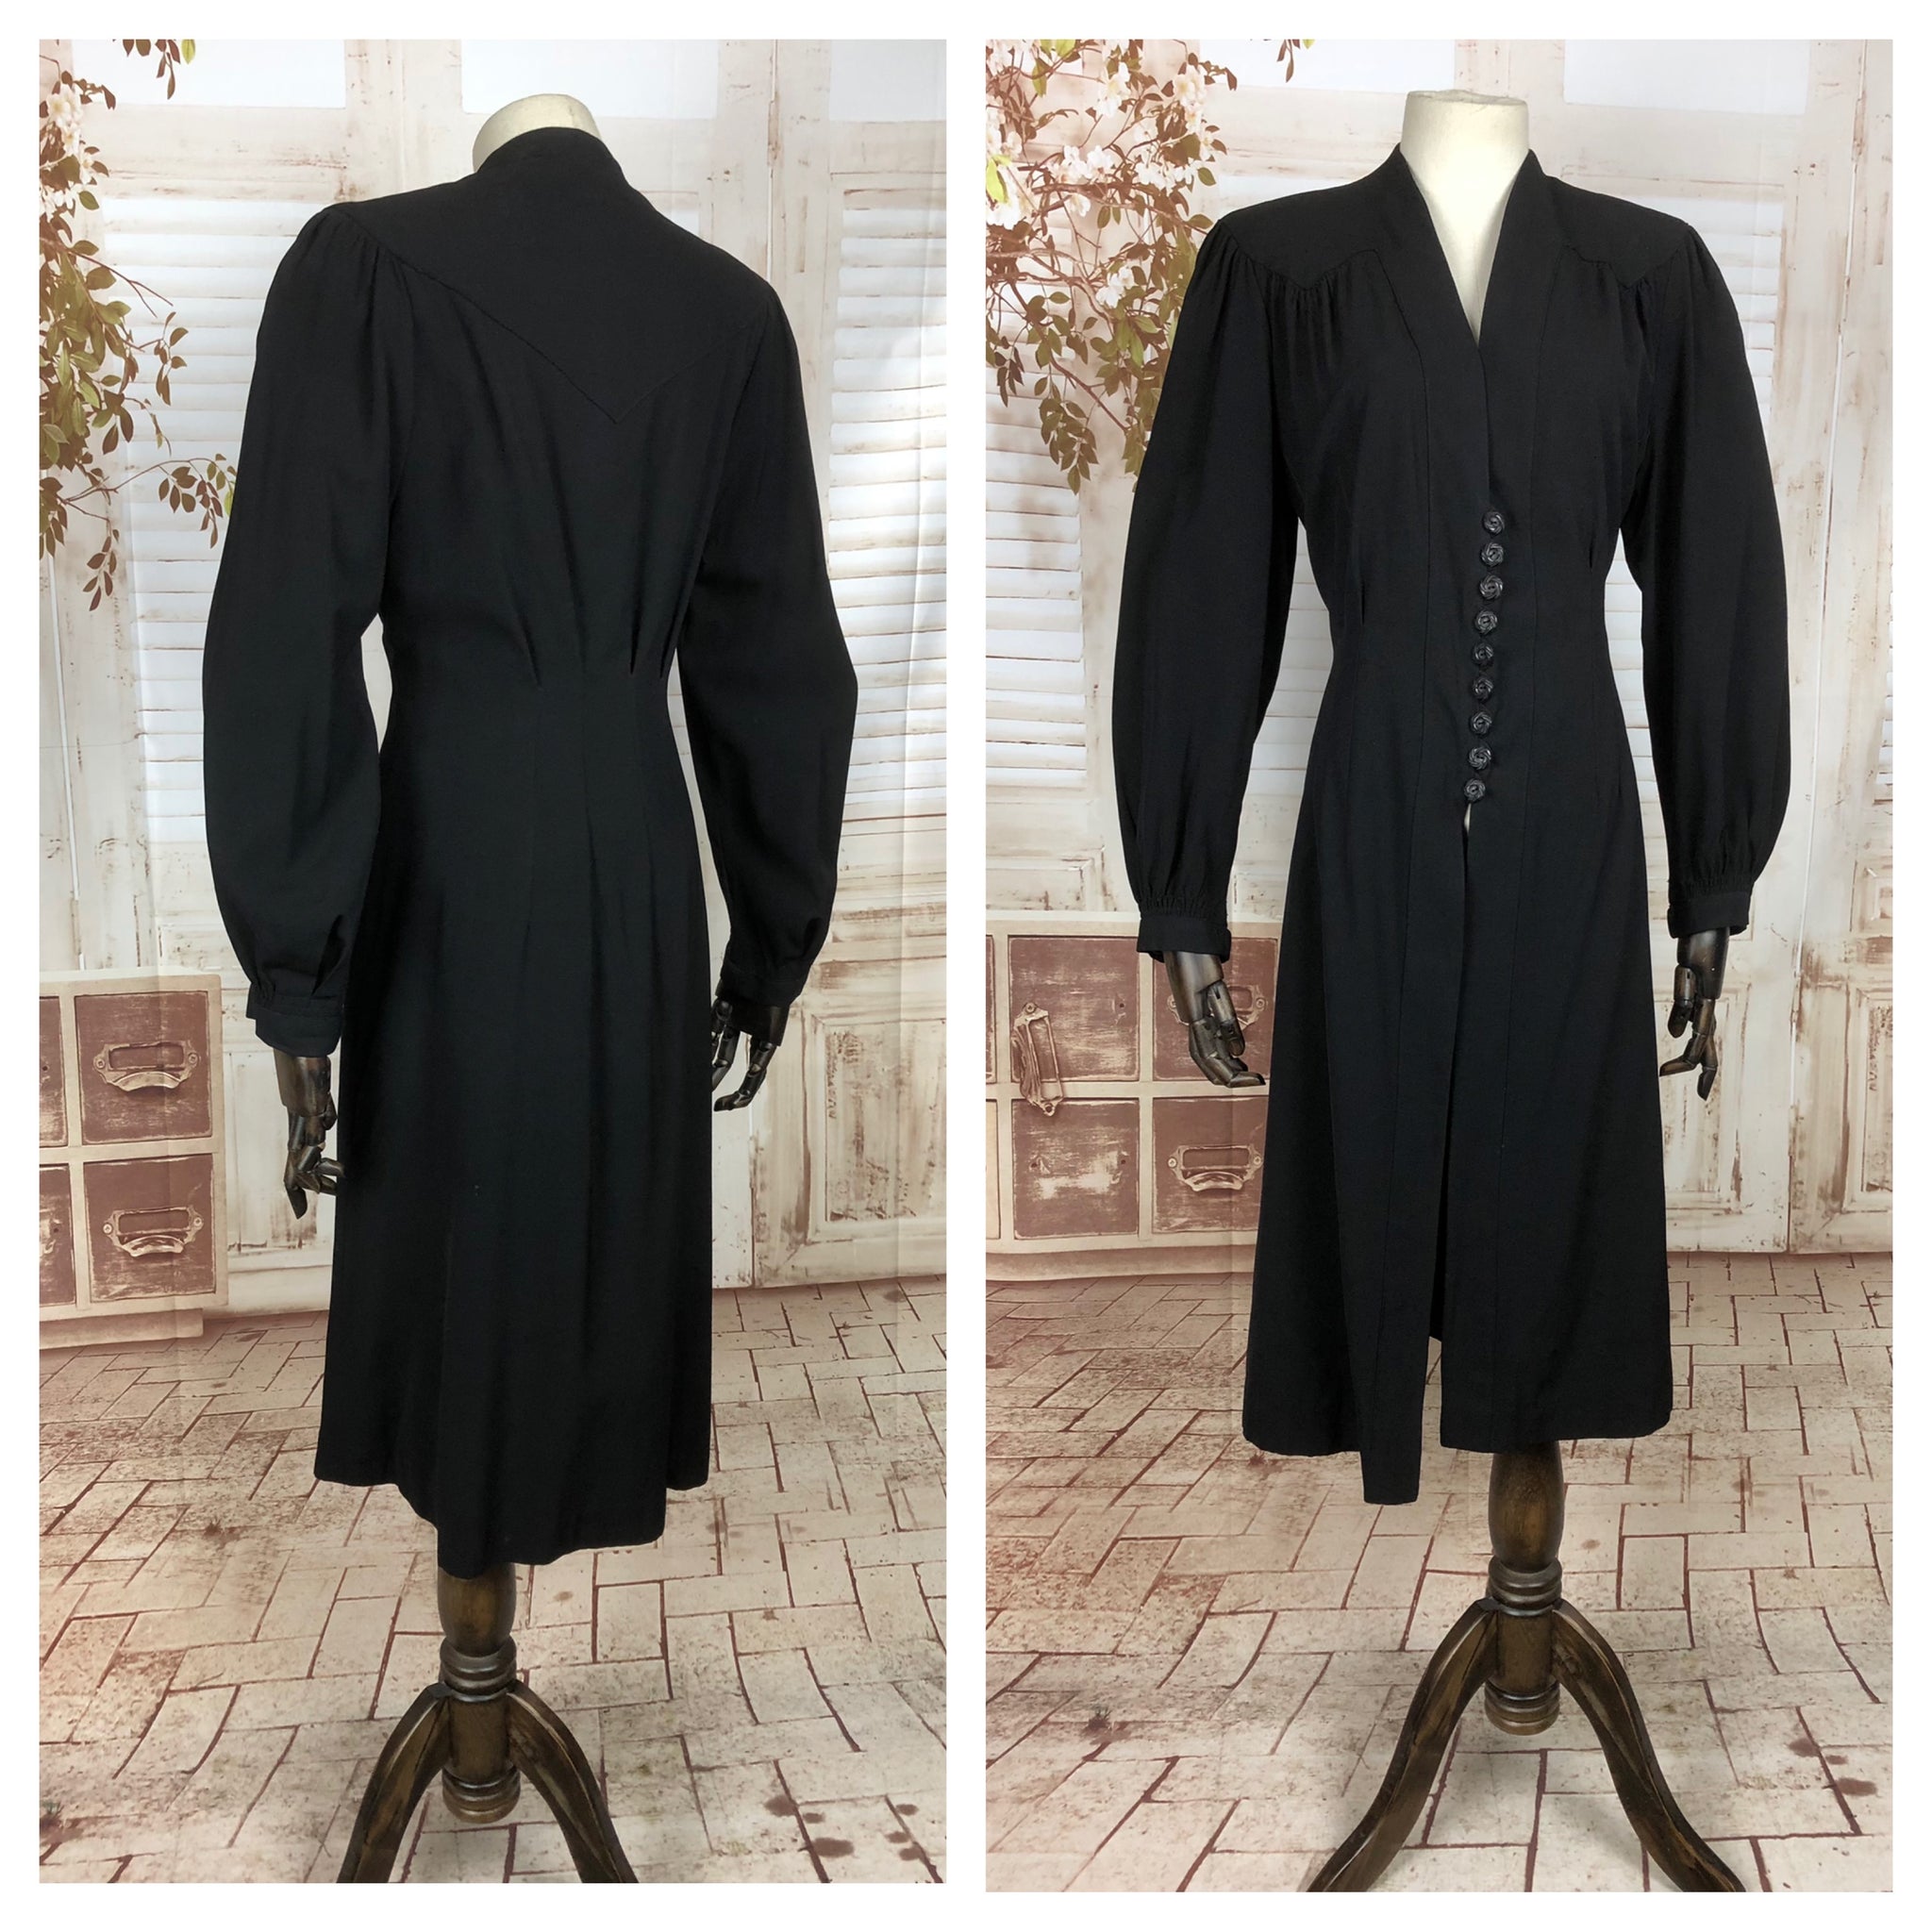 Original Vintage 1930s 30s Black Cotton Princess Coat With Bishop Sleeves And Bakelite Buttons